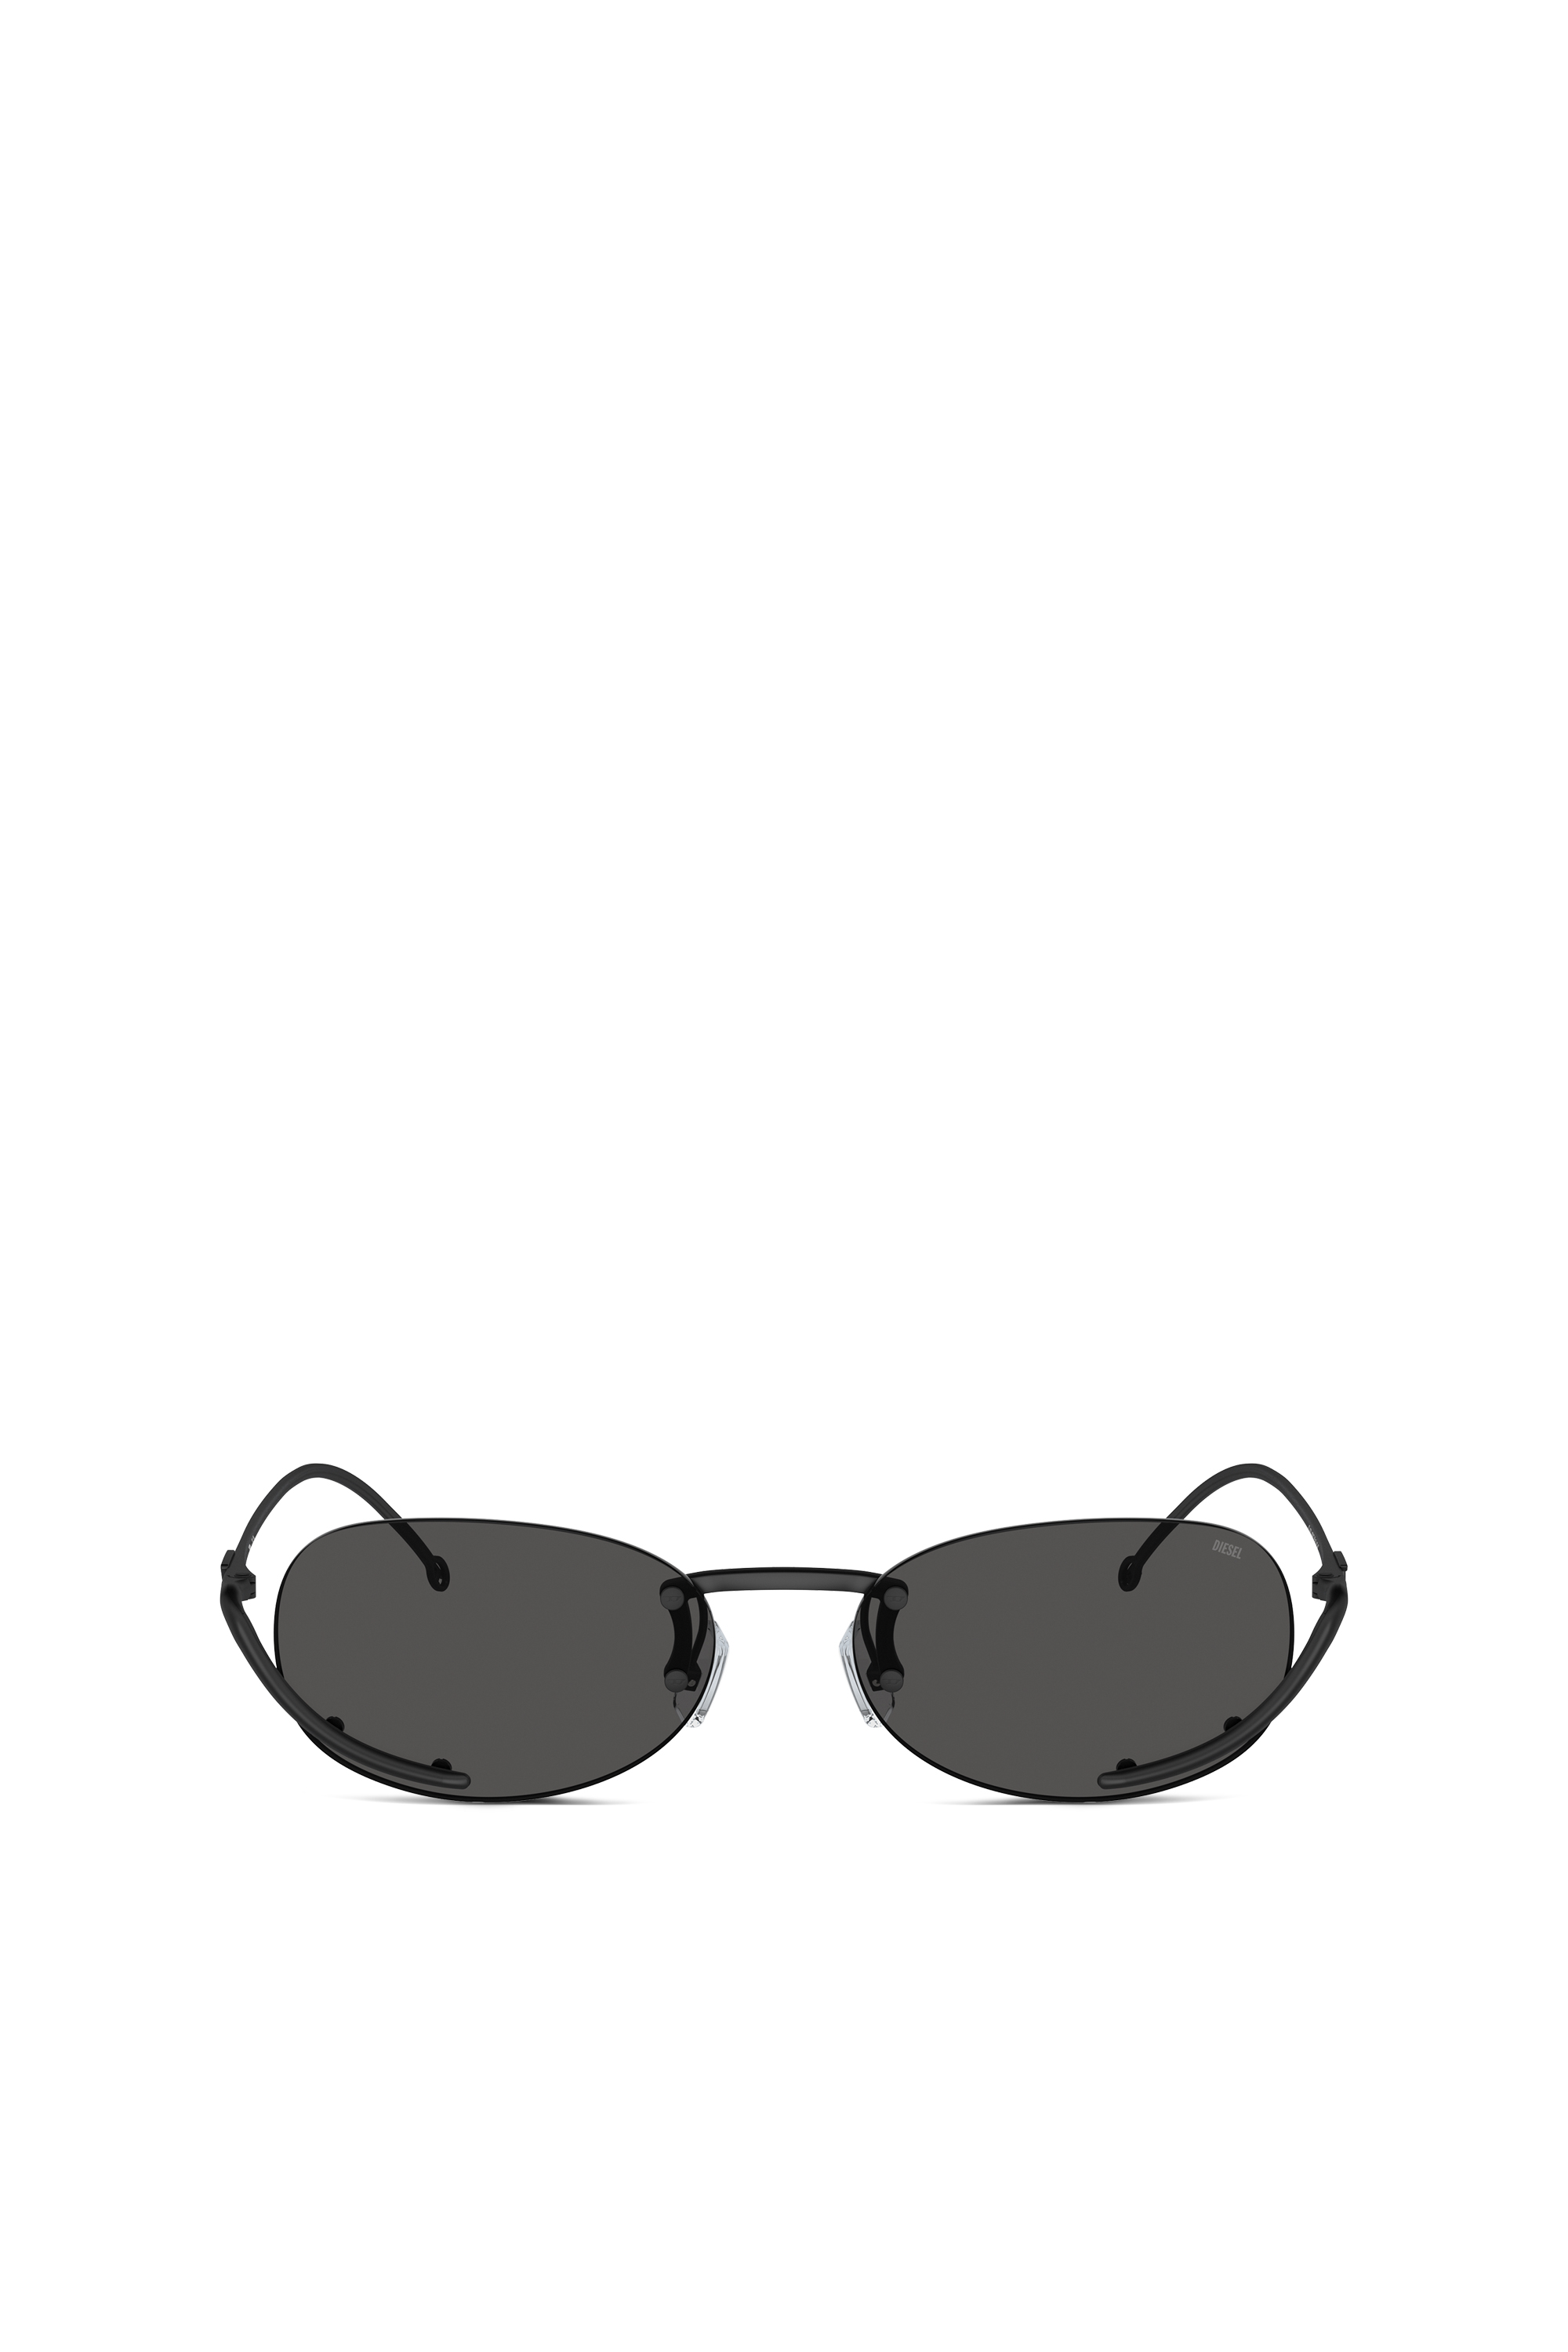 Diesel - Gafas ovales - Gafas de sol - Unisex - Negro